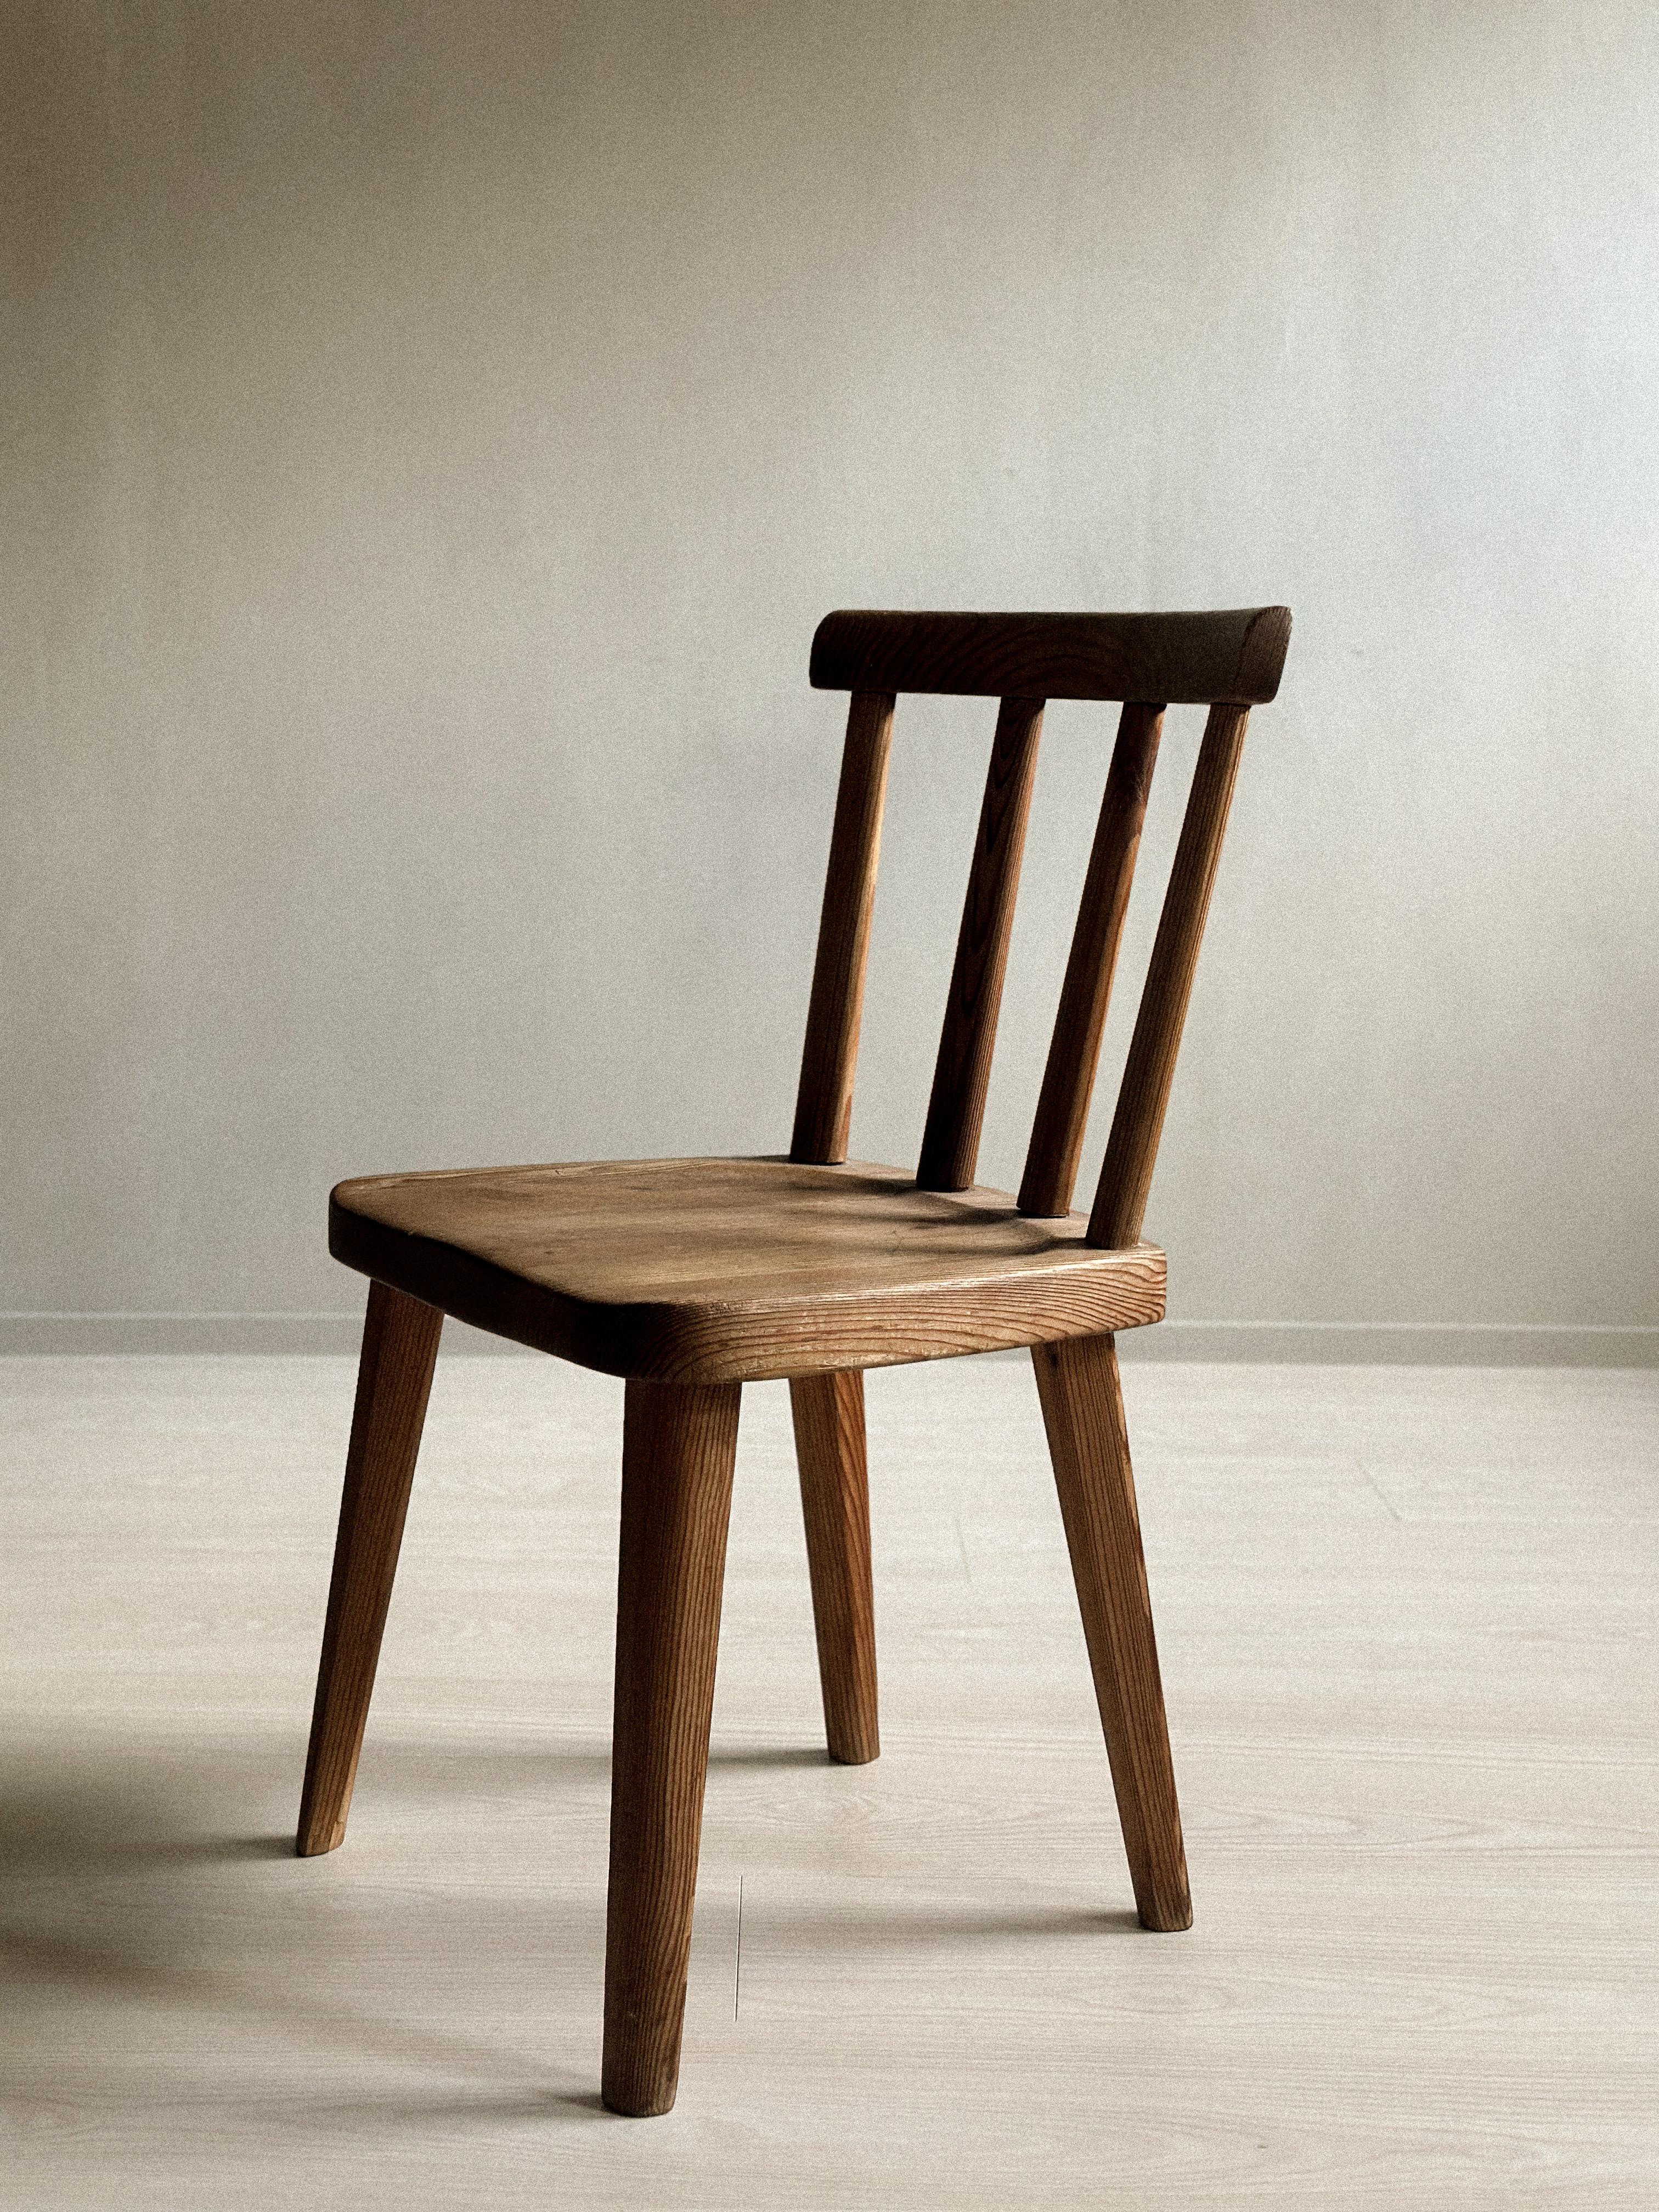 A single Utö Dining Chair by Axel Einar Hjorth for Nordiska Kompaniet, 1930s For Sale 2